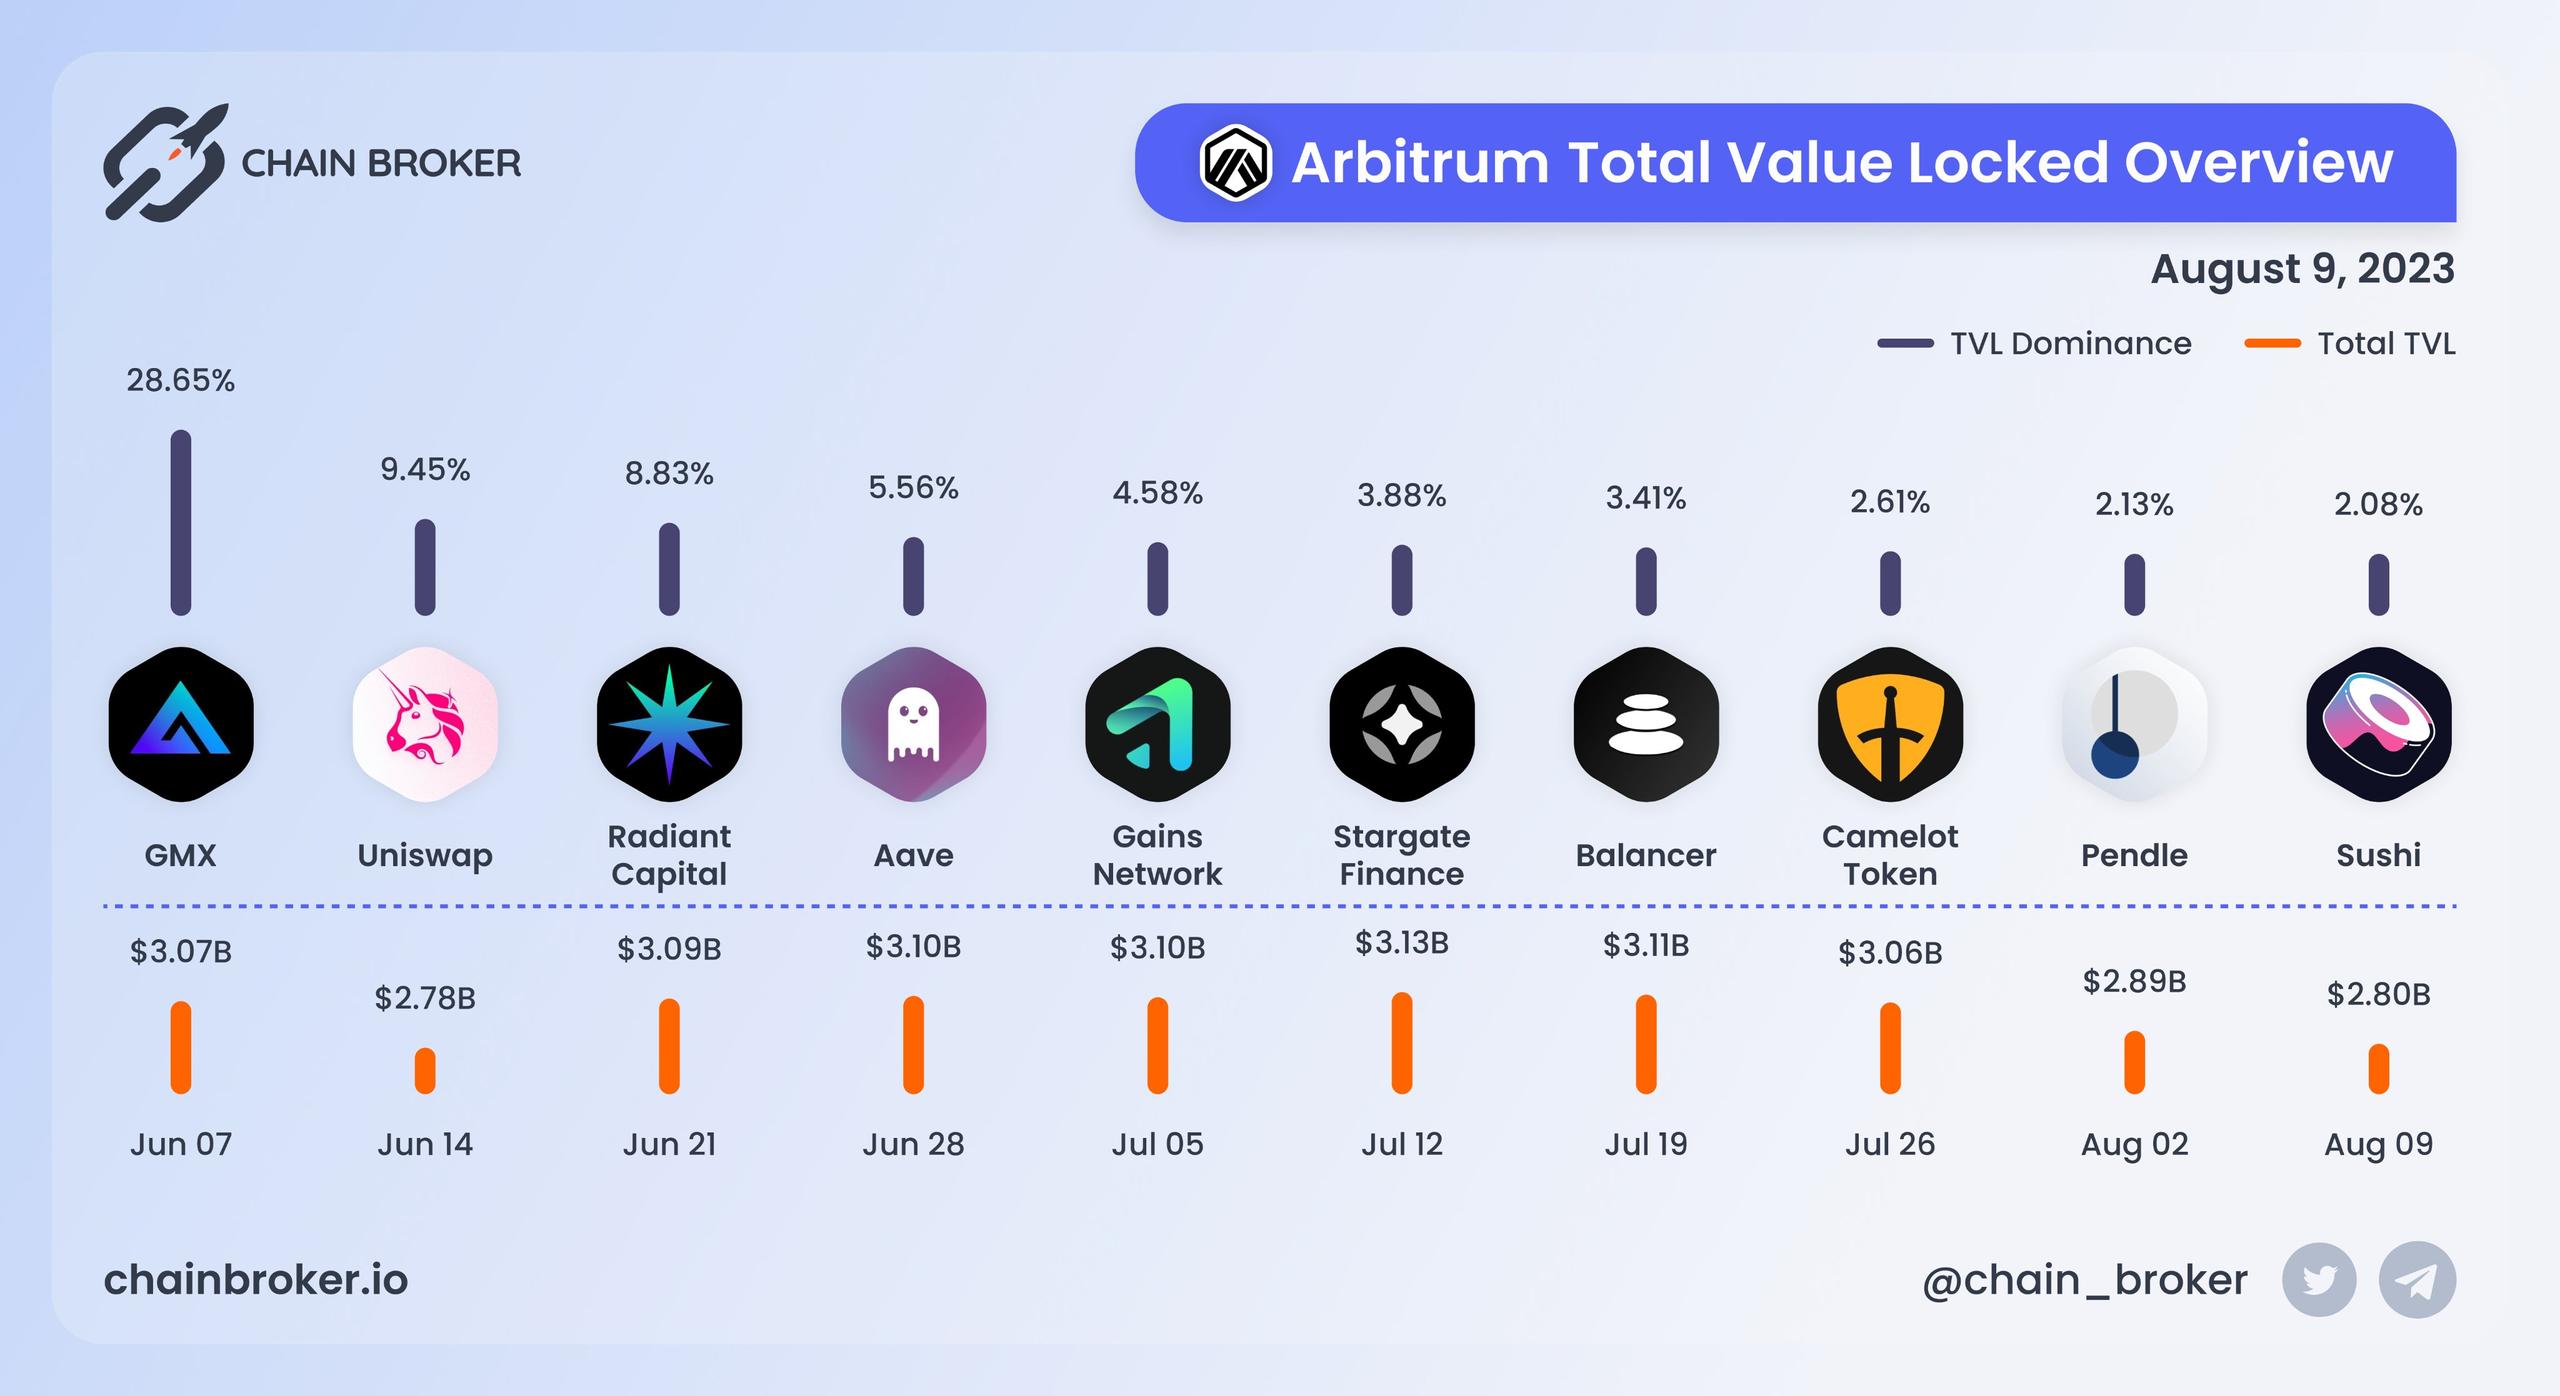 Arbitrum total value locked overview